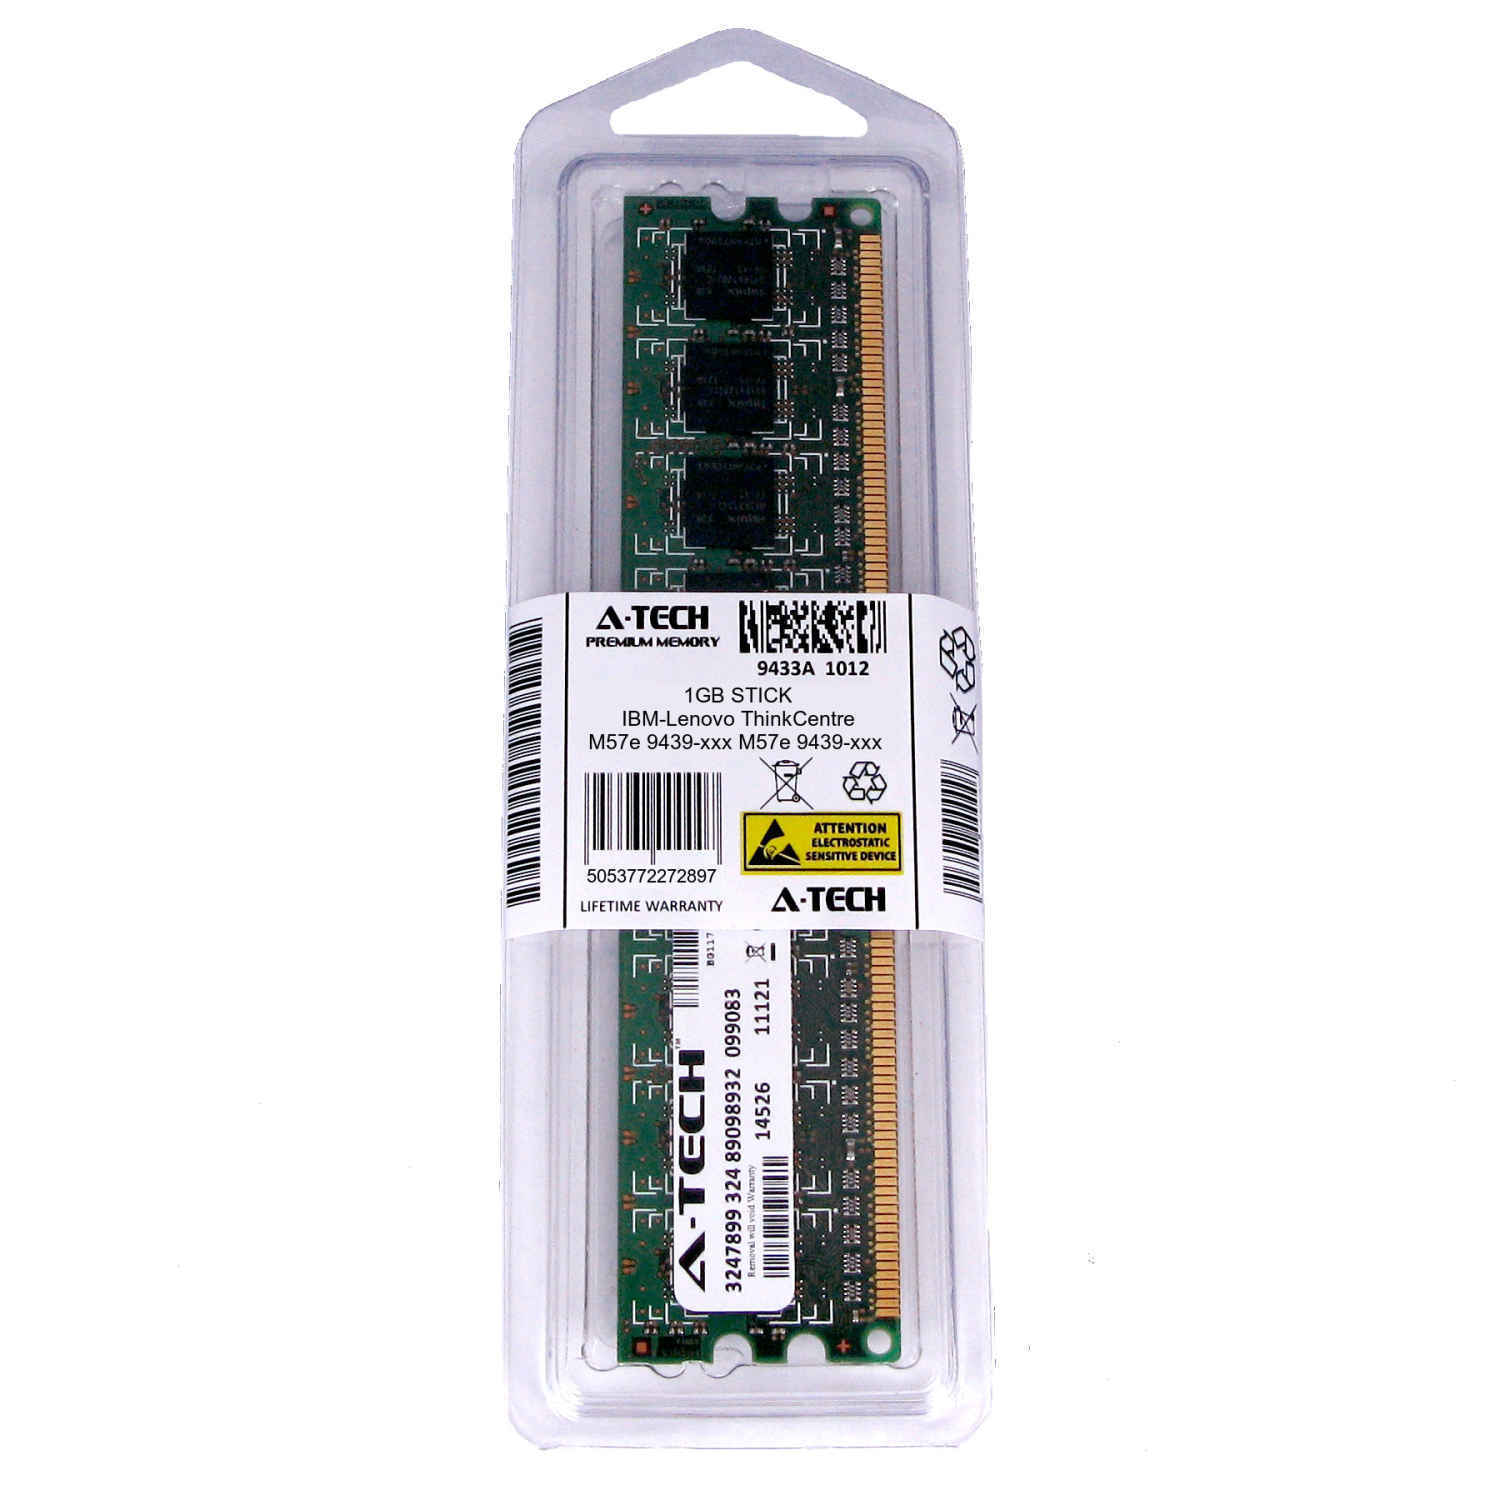 1GB DIMM IBM-Lenovo ThinkCentre M57e 9439-xxx 9481-xxx 9482-xxx Ram Memory